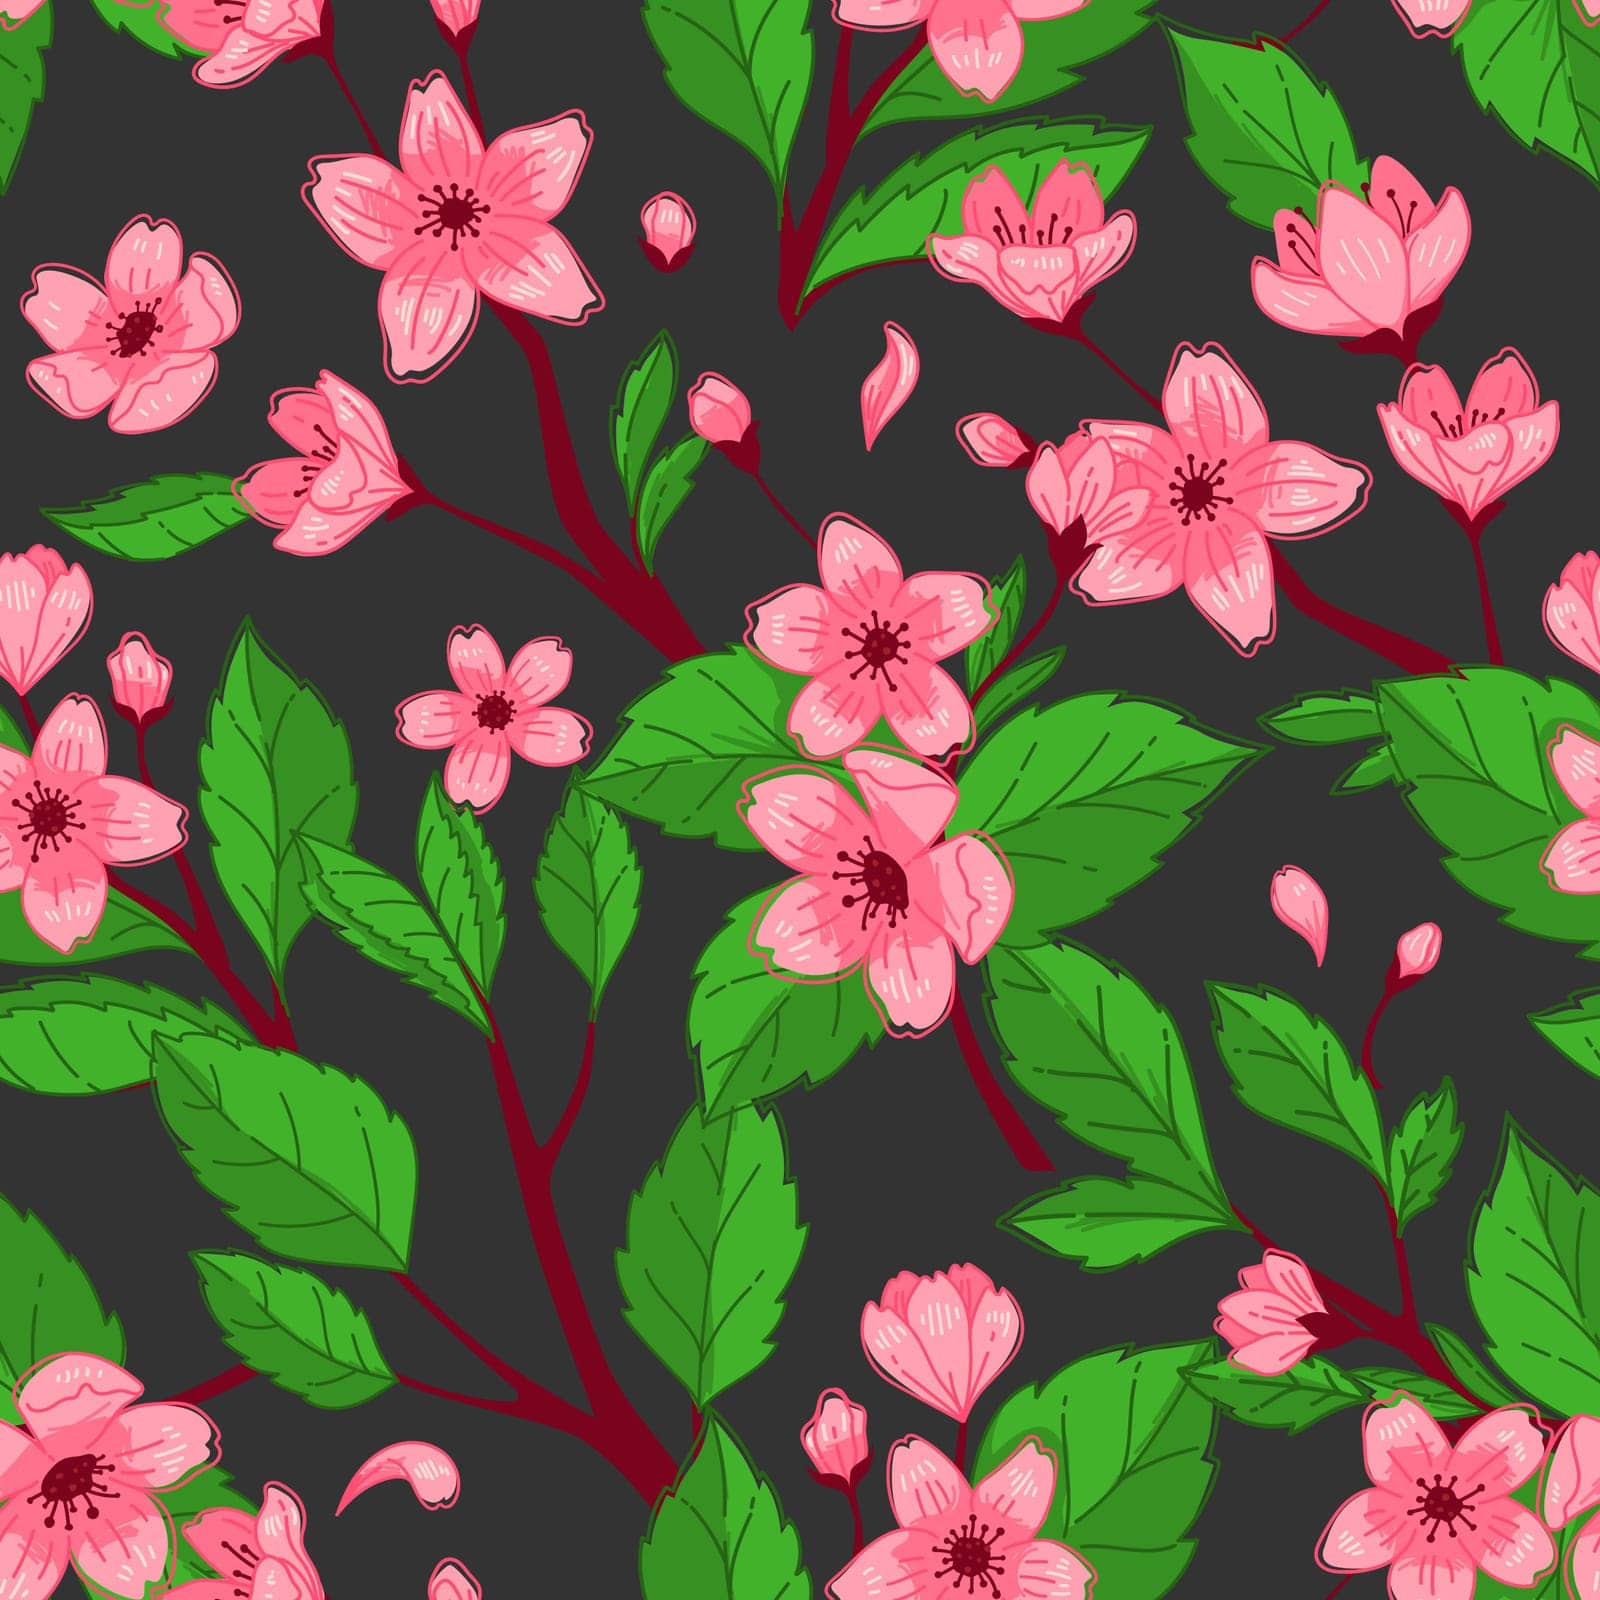 Dark Cherry Blossoms Seamless Fabric by Sonulkaster